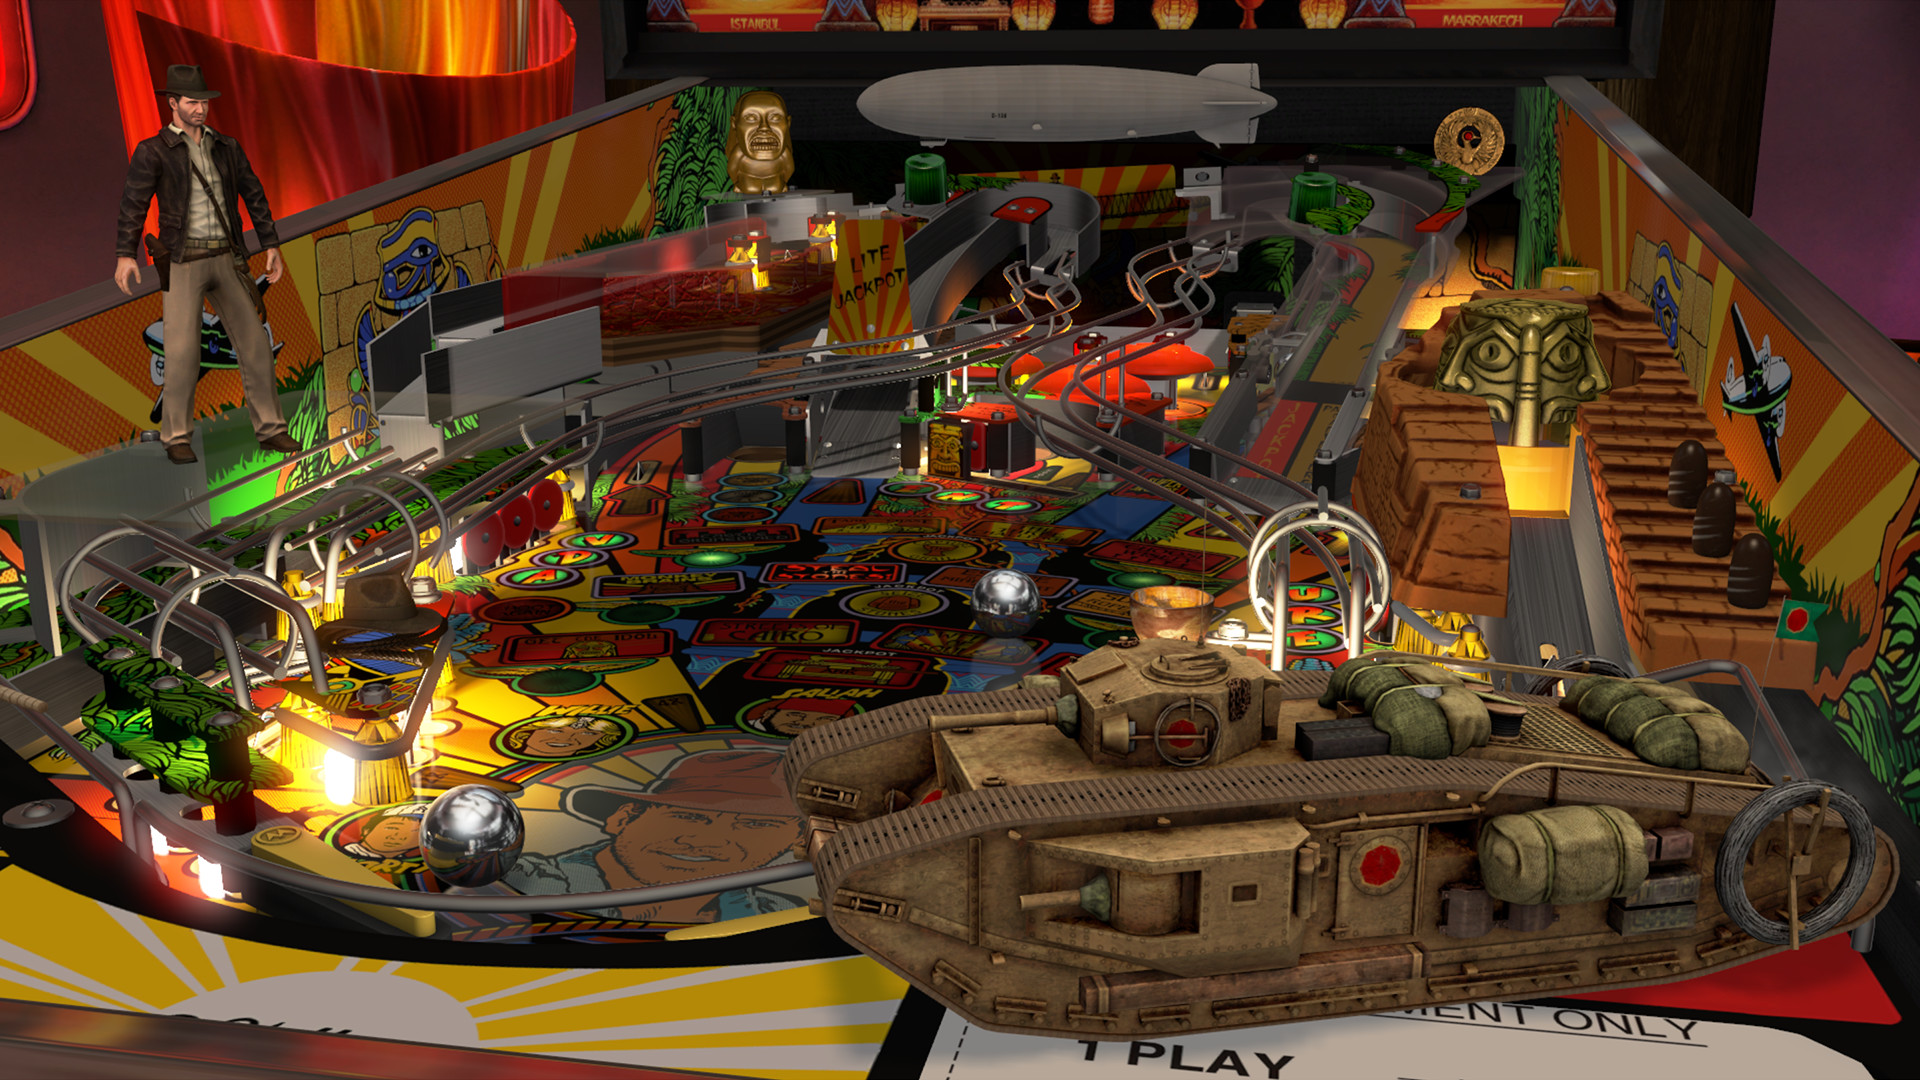 Pinball FX3 - Indiana Jones: The Pinball Adventure DLC Steam CD Key